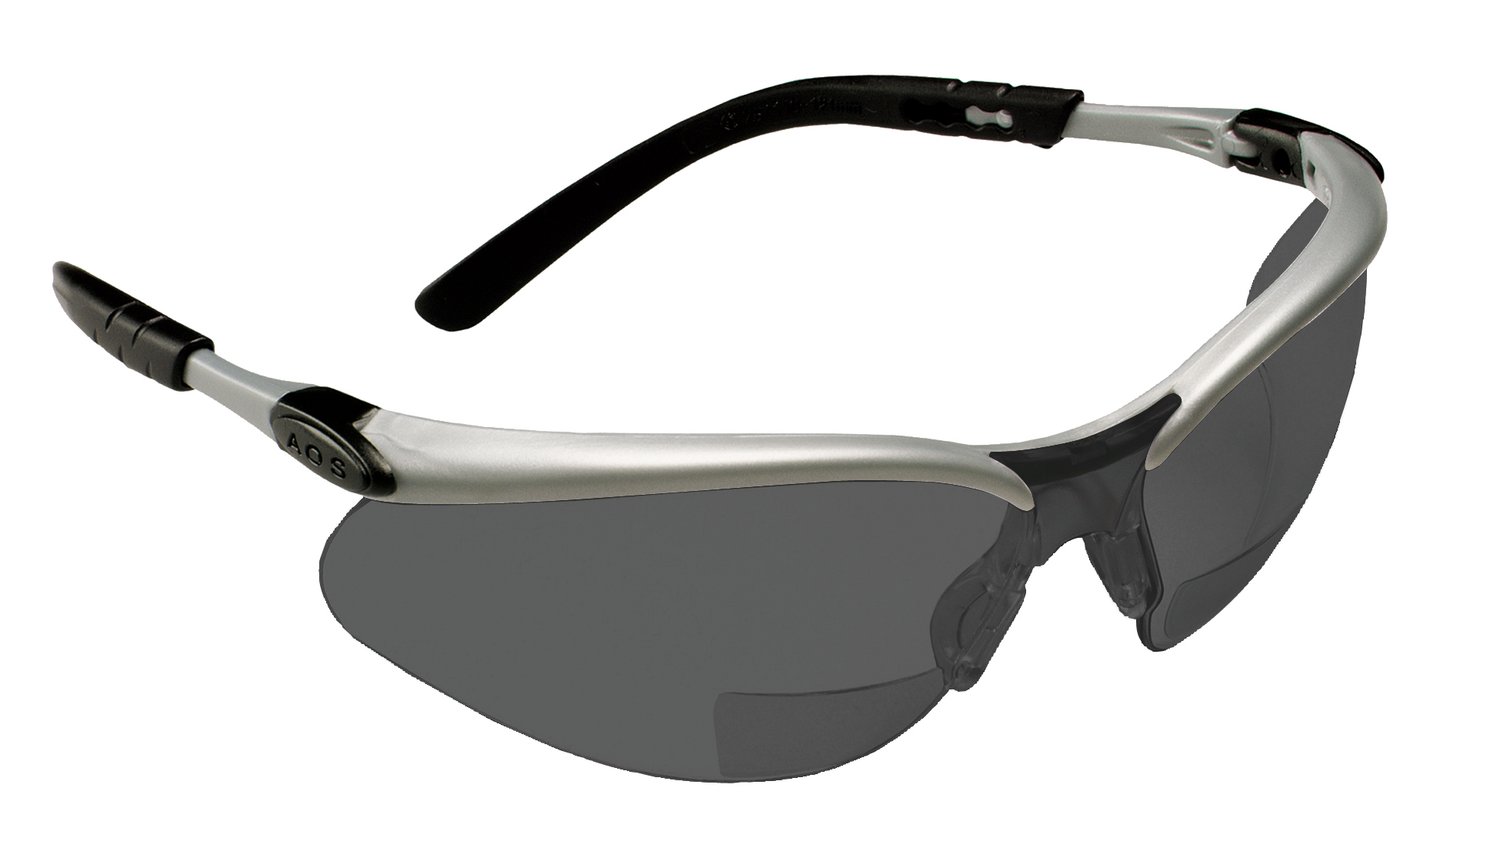 7000127493 - 3M BX Reader Protective Eyewear 11378-00000-20, Grey Lens, Silver
Frame, +2.0 Diopter, 20 ea/Case